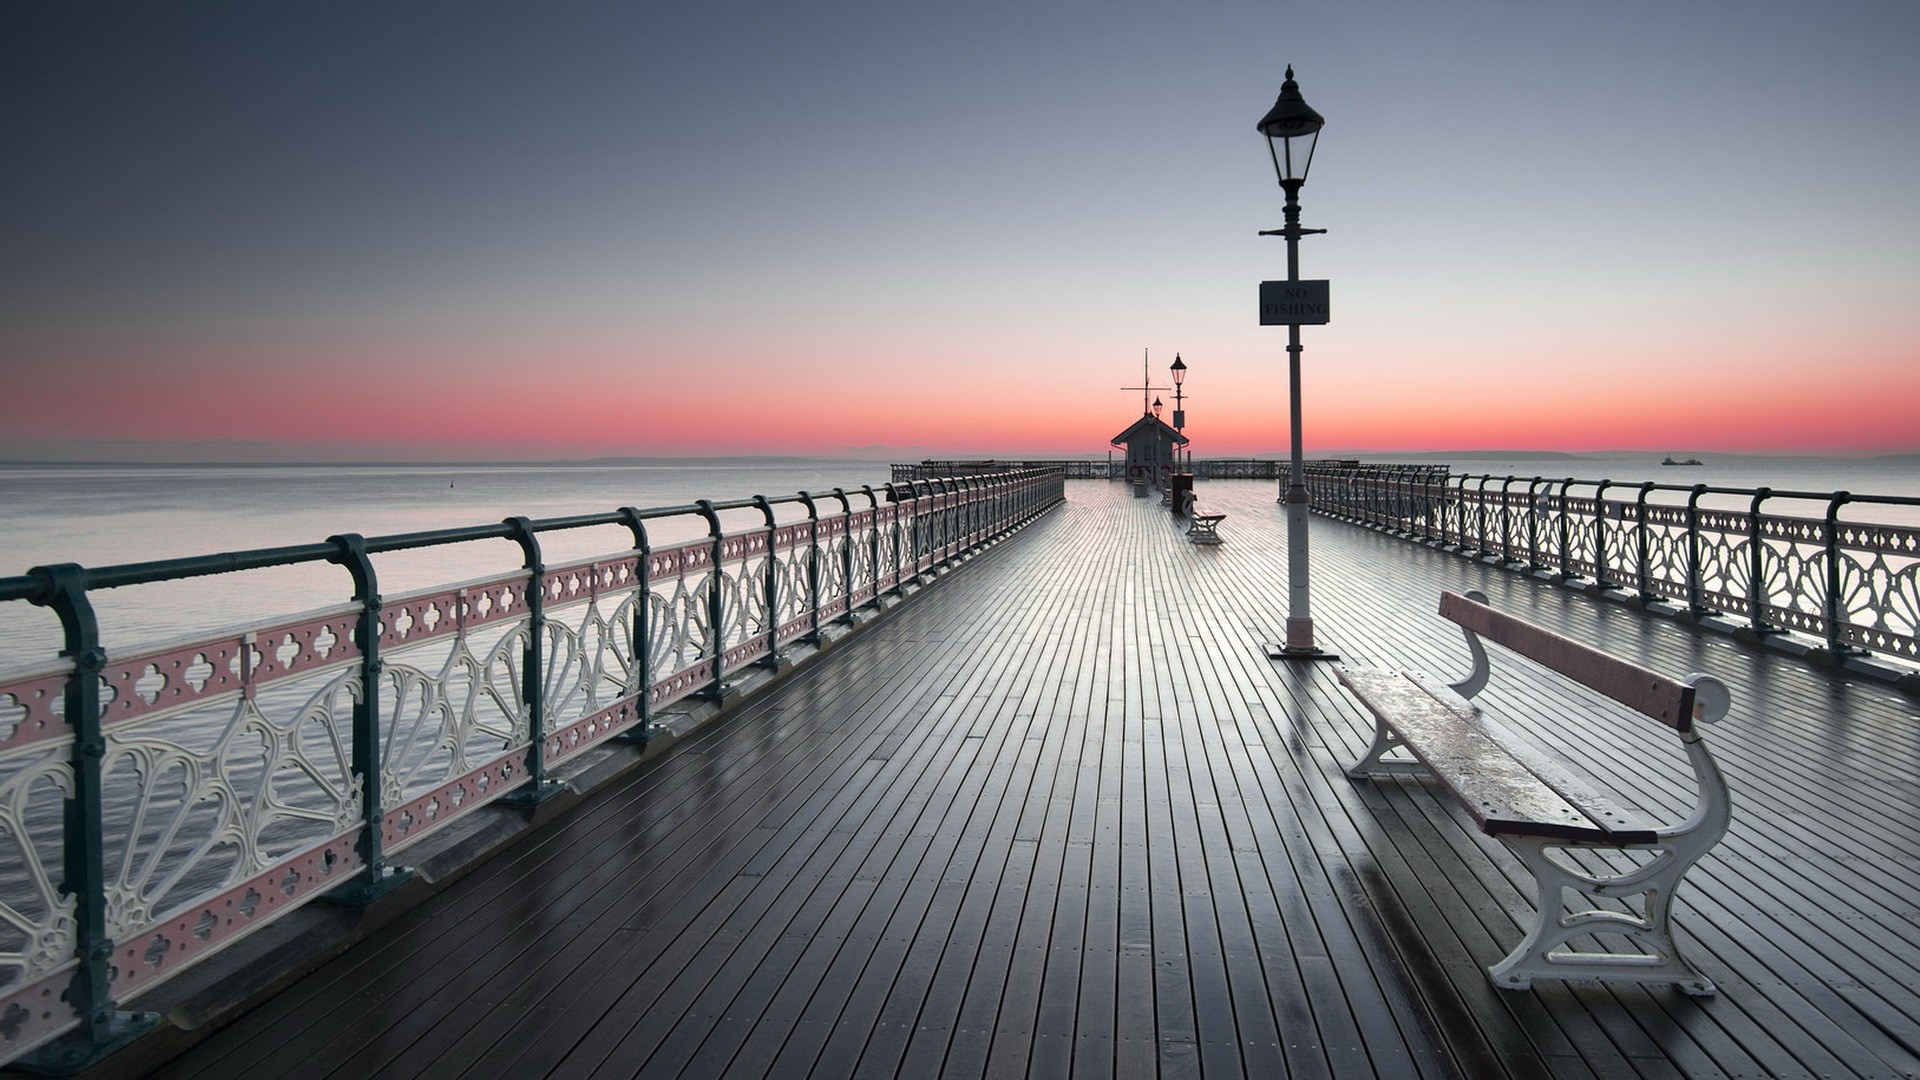 General 1920x1080 Cardiff sea England landscape pier UK lantern sky horizon bench outdoors